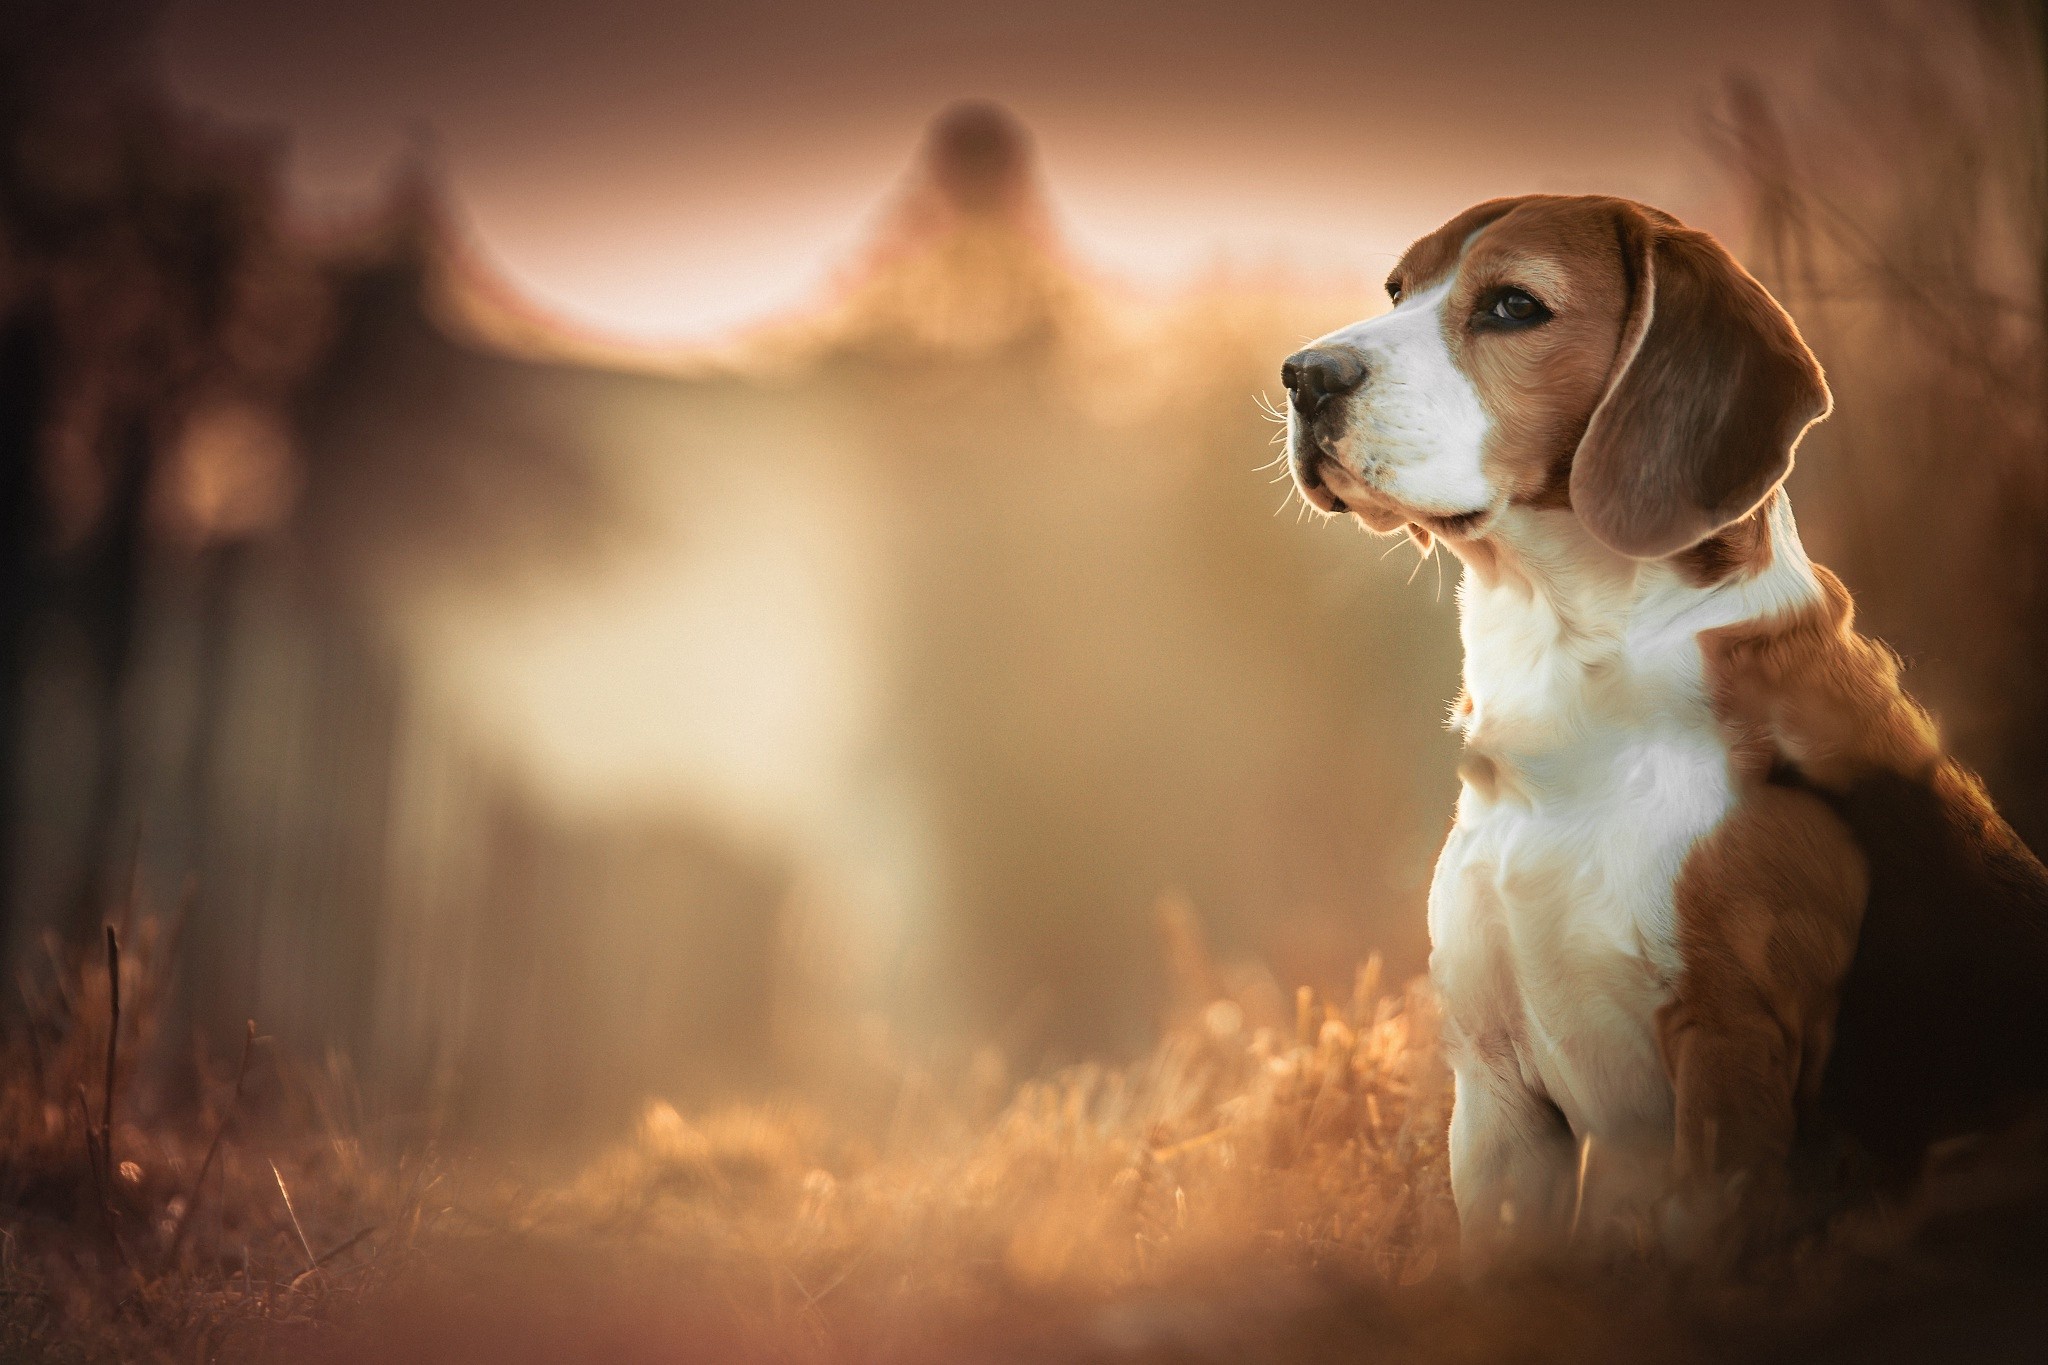 General 2048x1365 Beagles dog blurred depth of field animals mammals outdoors closeup